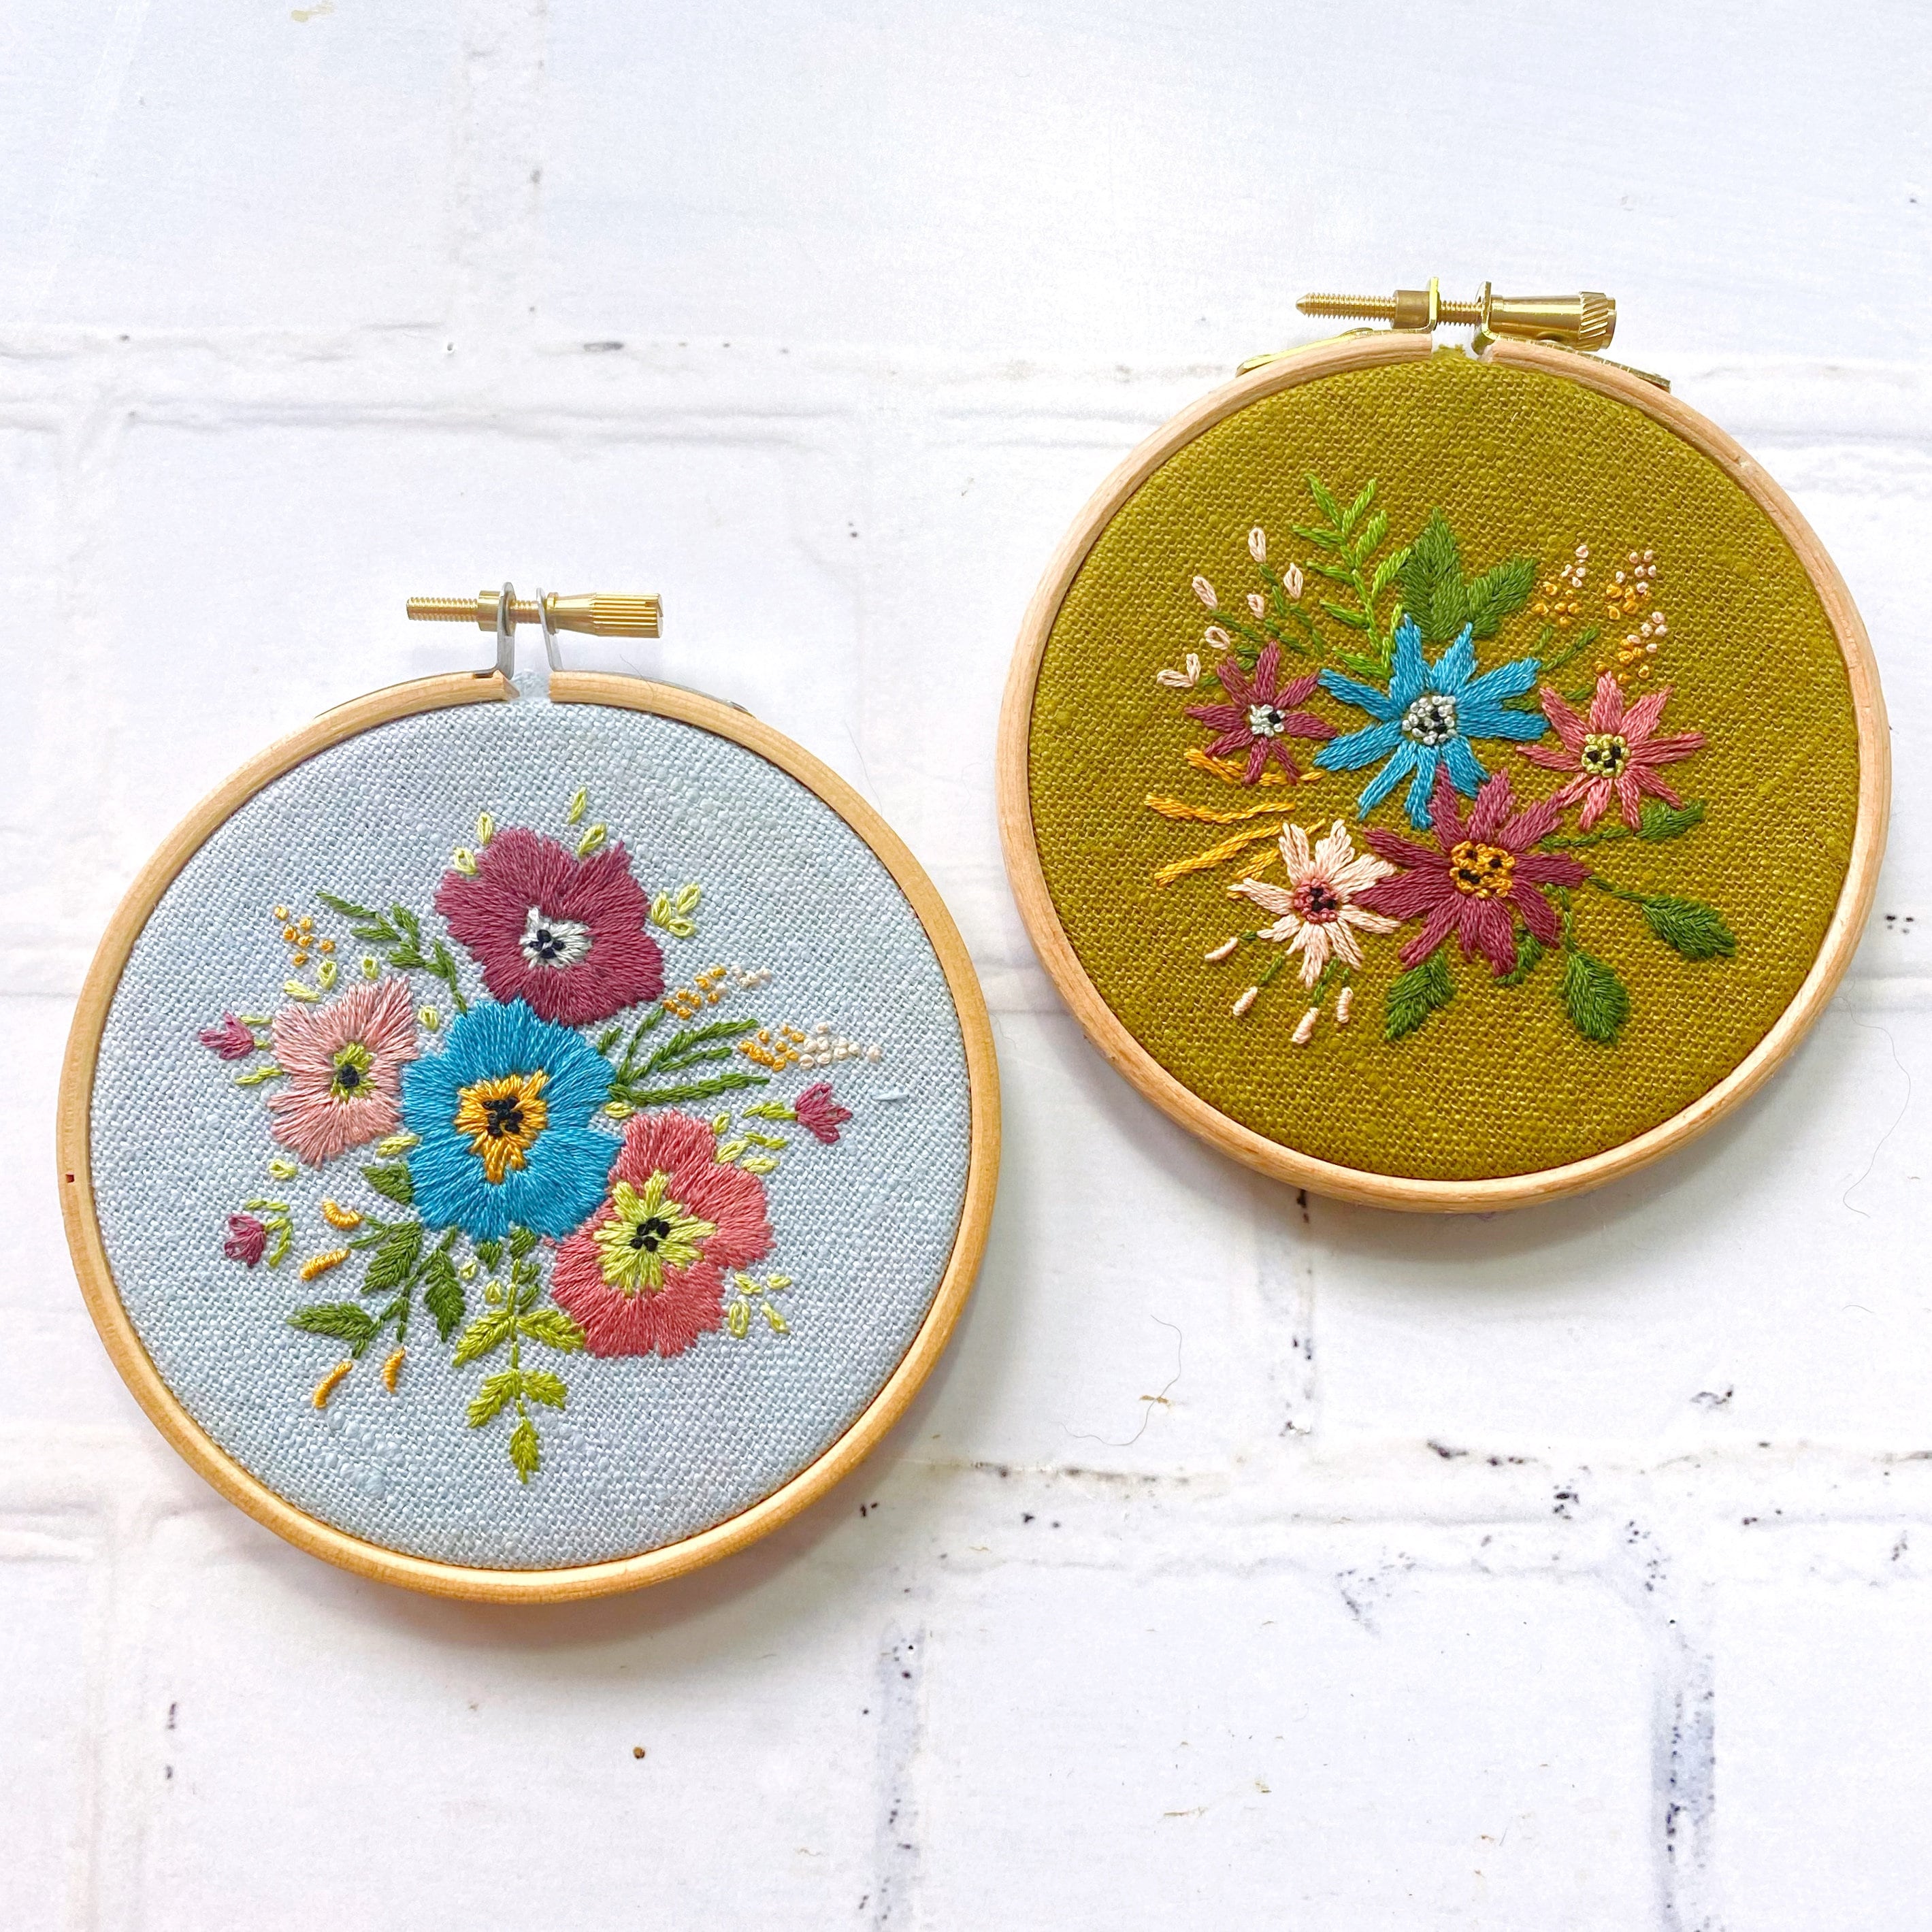 Floral Flourish Embroidery Kit